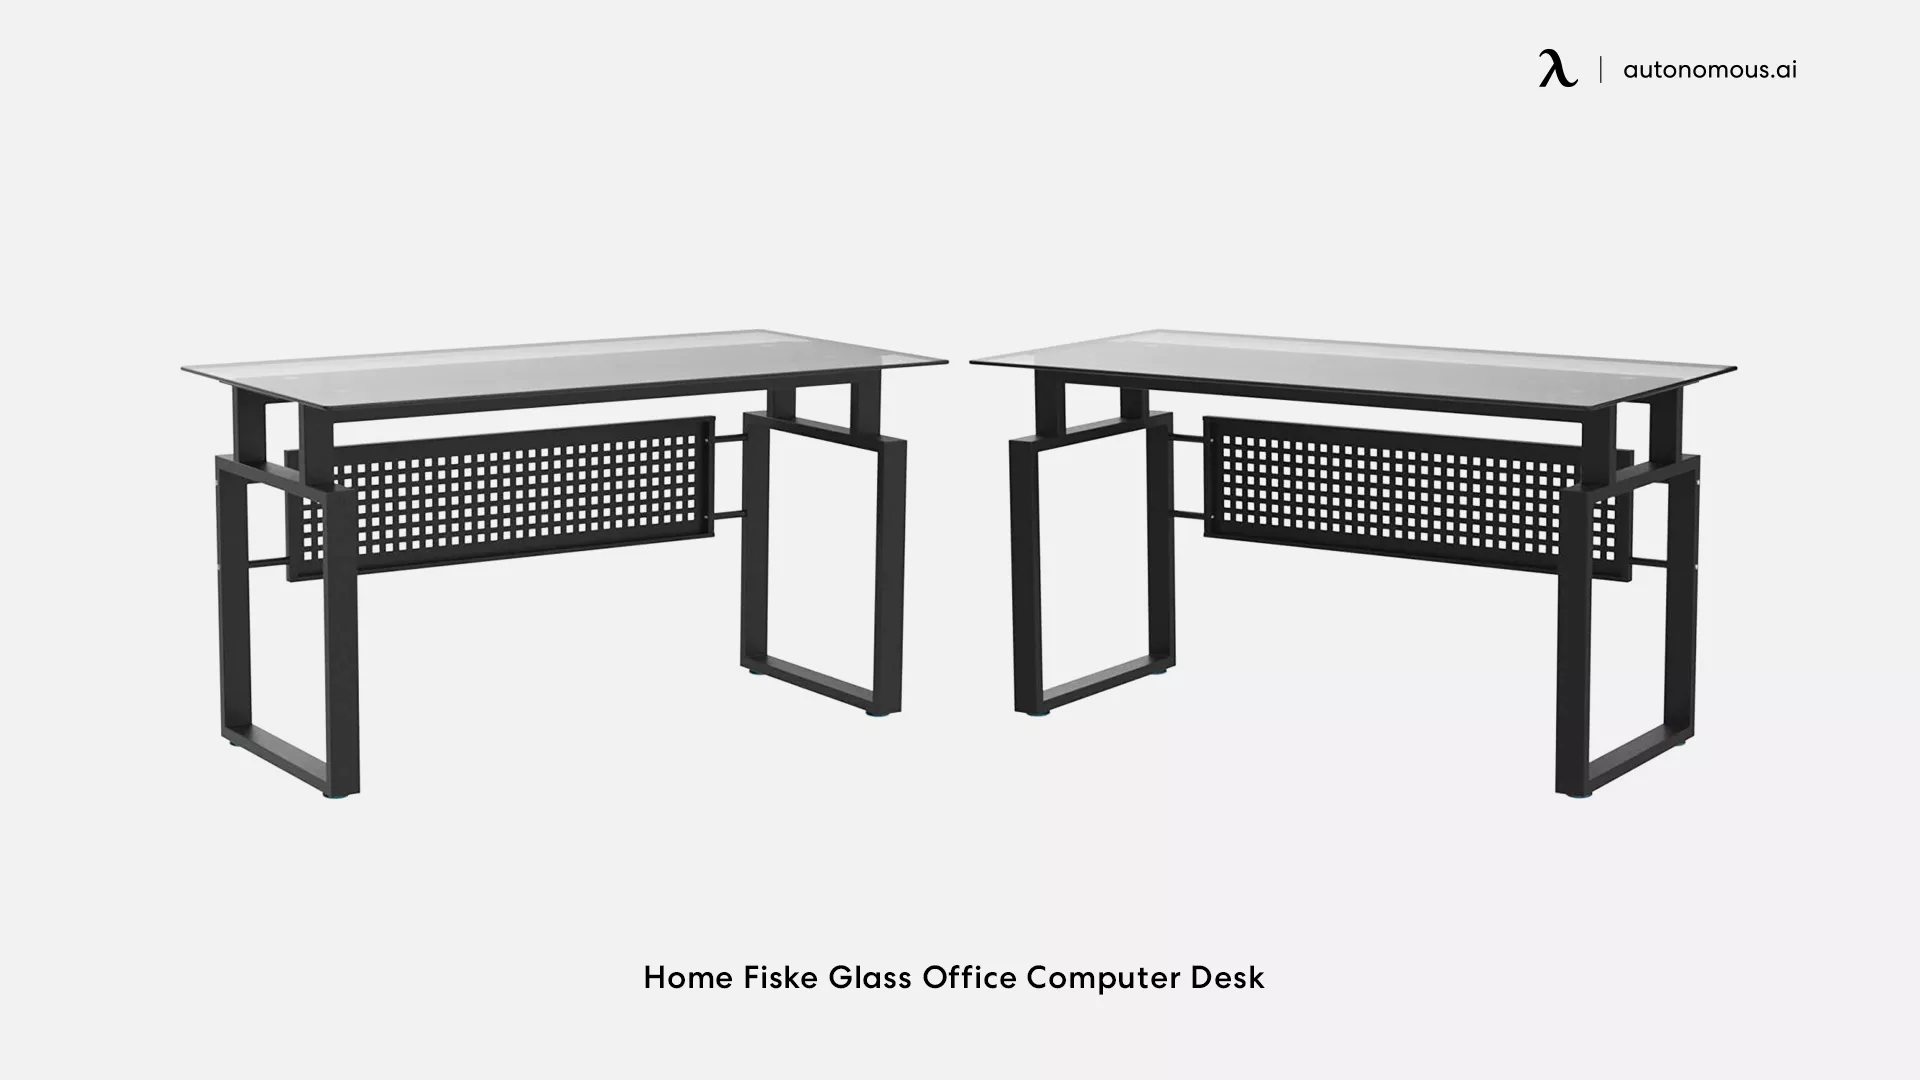 Home Fiske Glass Office Computer Desk